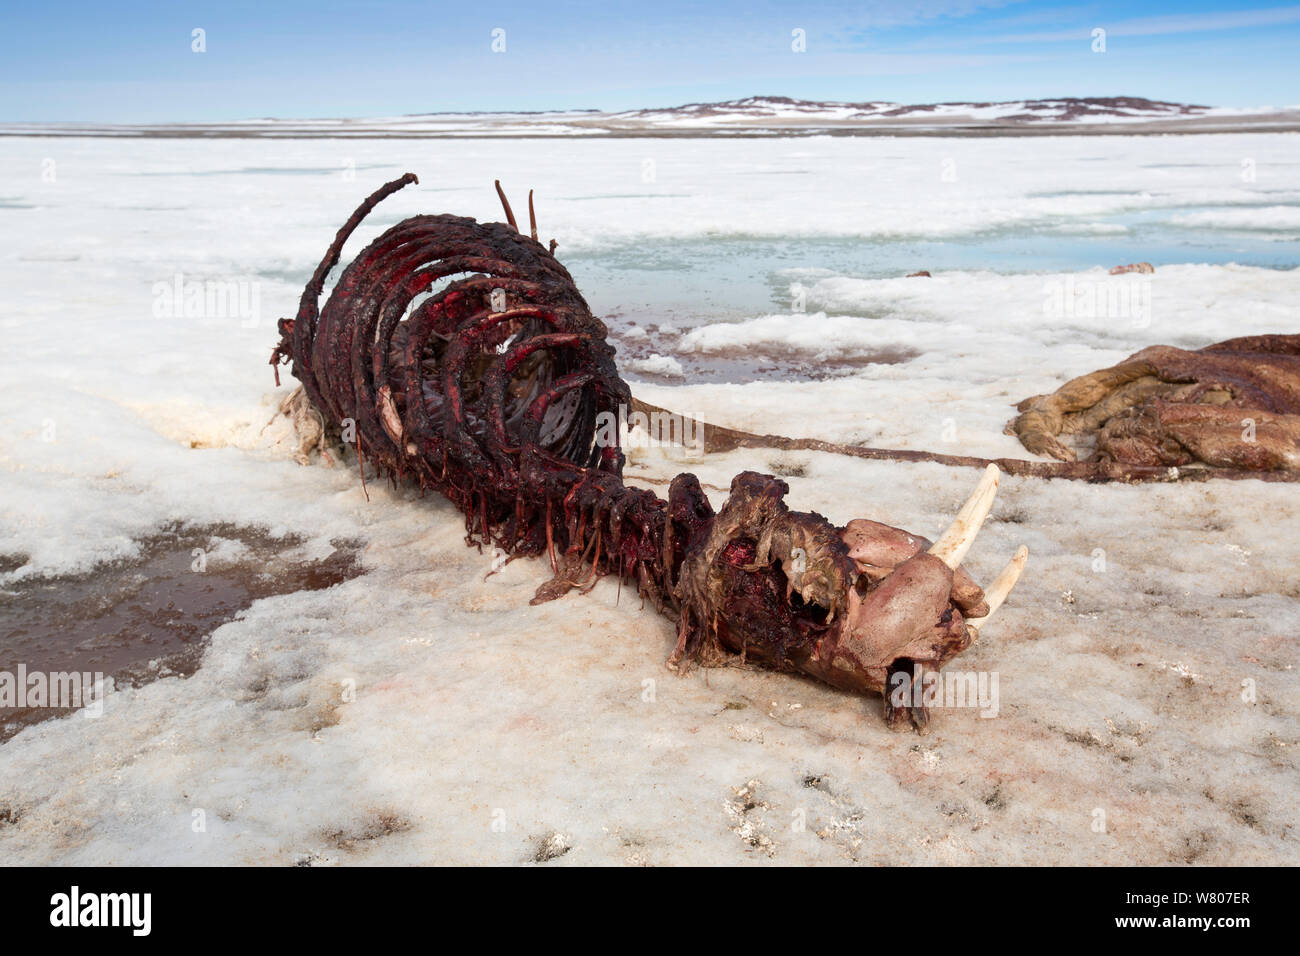 Walrus (Odobenus rosmarus) skeleton on shore, Spitsbergen, Svalbard Archipelago, Norway, Arctic Ocean. July. Stock Photo